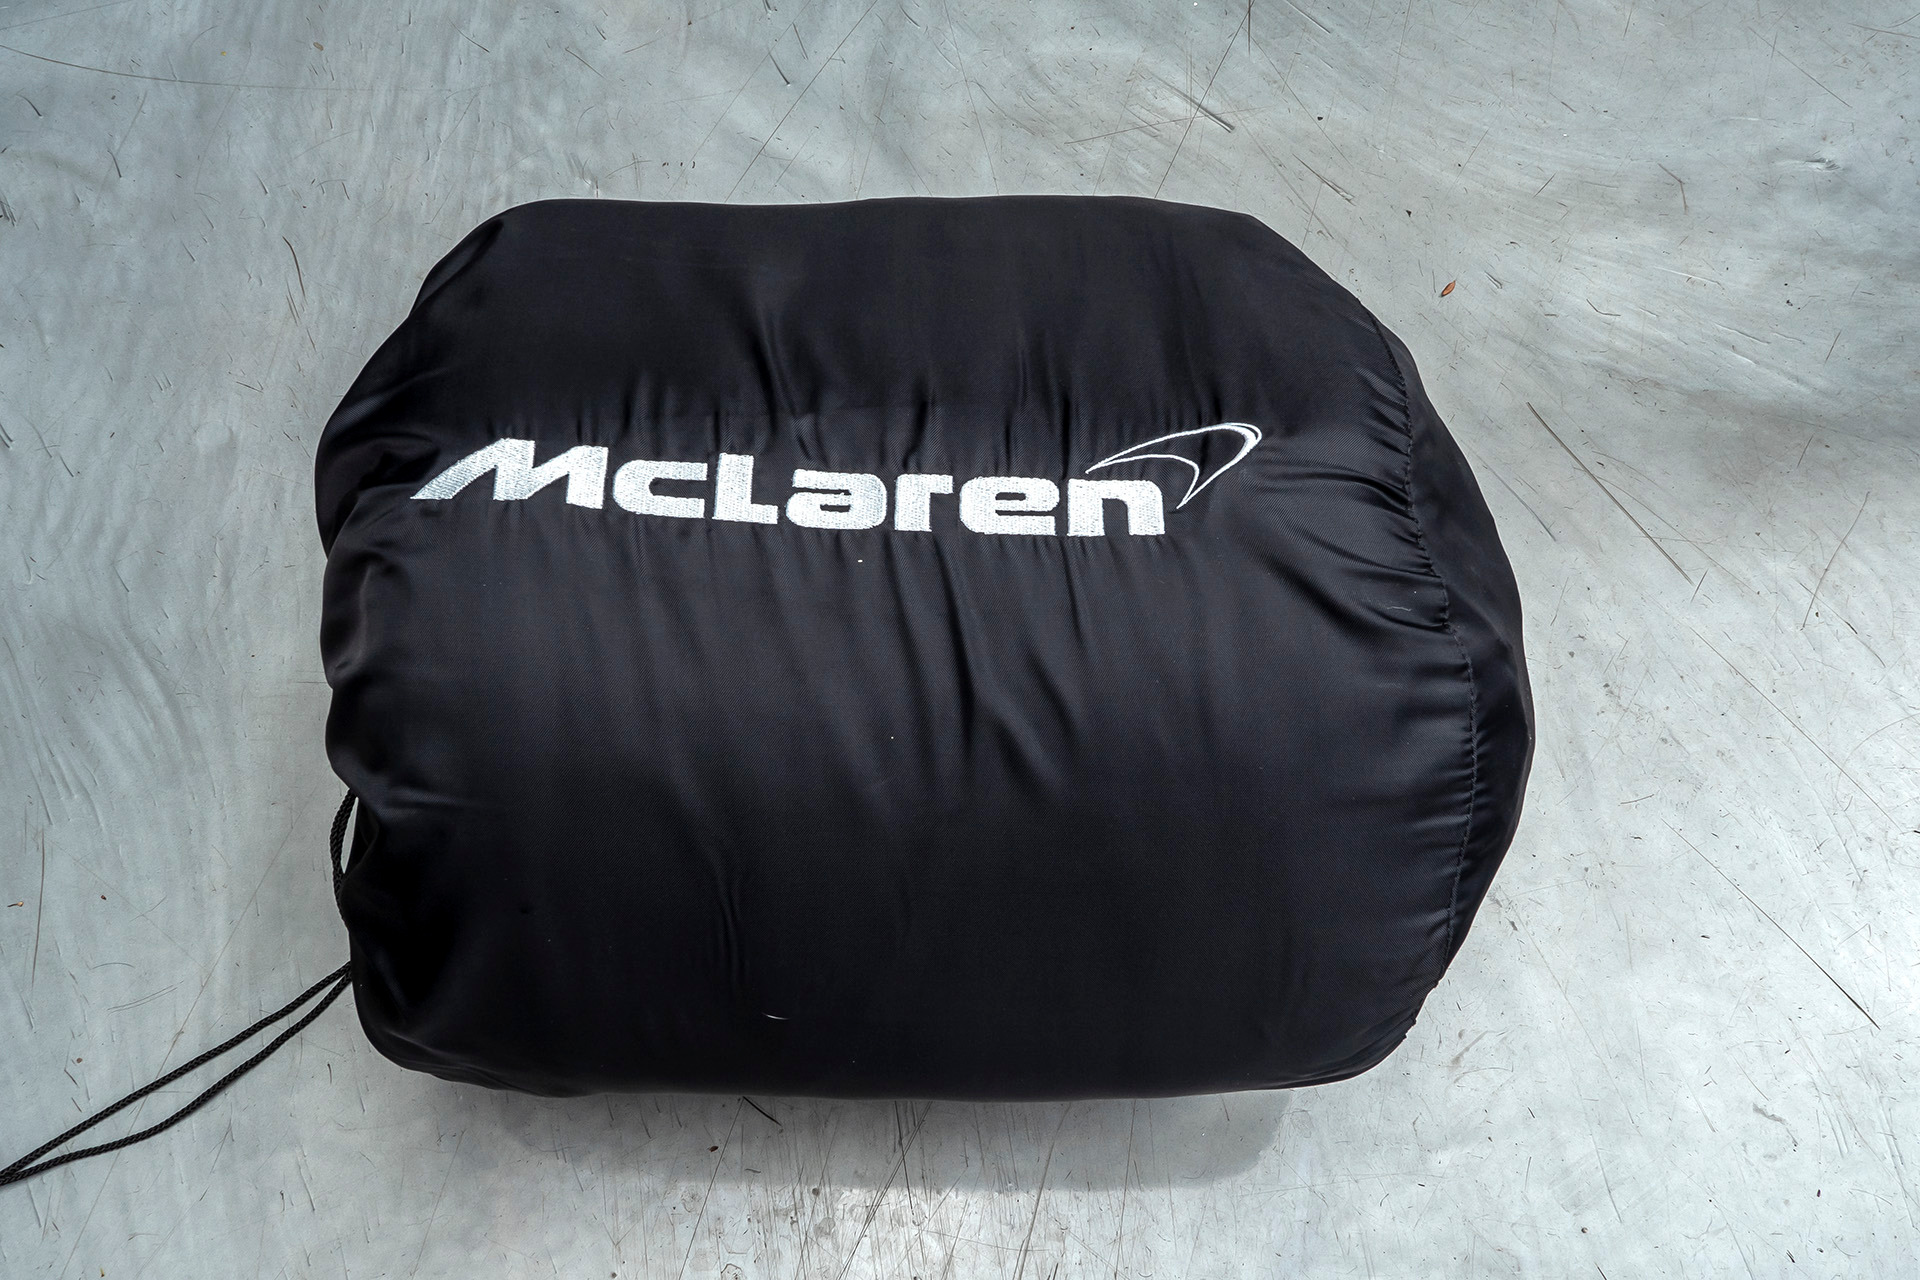 Used-2017-McLaren-570GT-Coupe-10-Spoke-Super-Lightweight-Diamond-Cut-Wheels